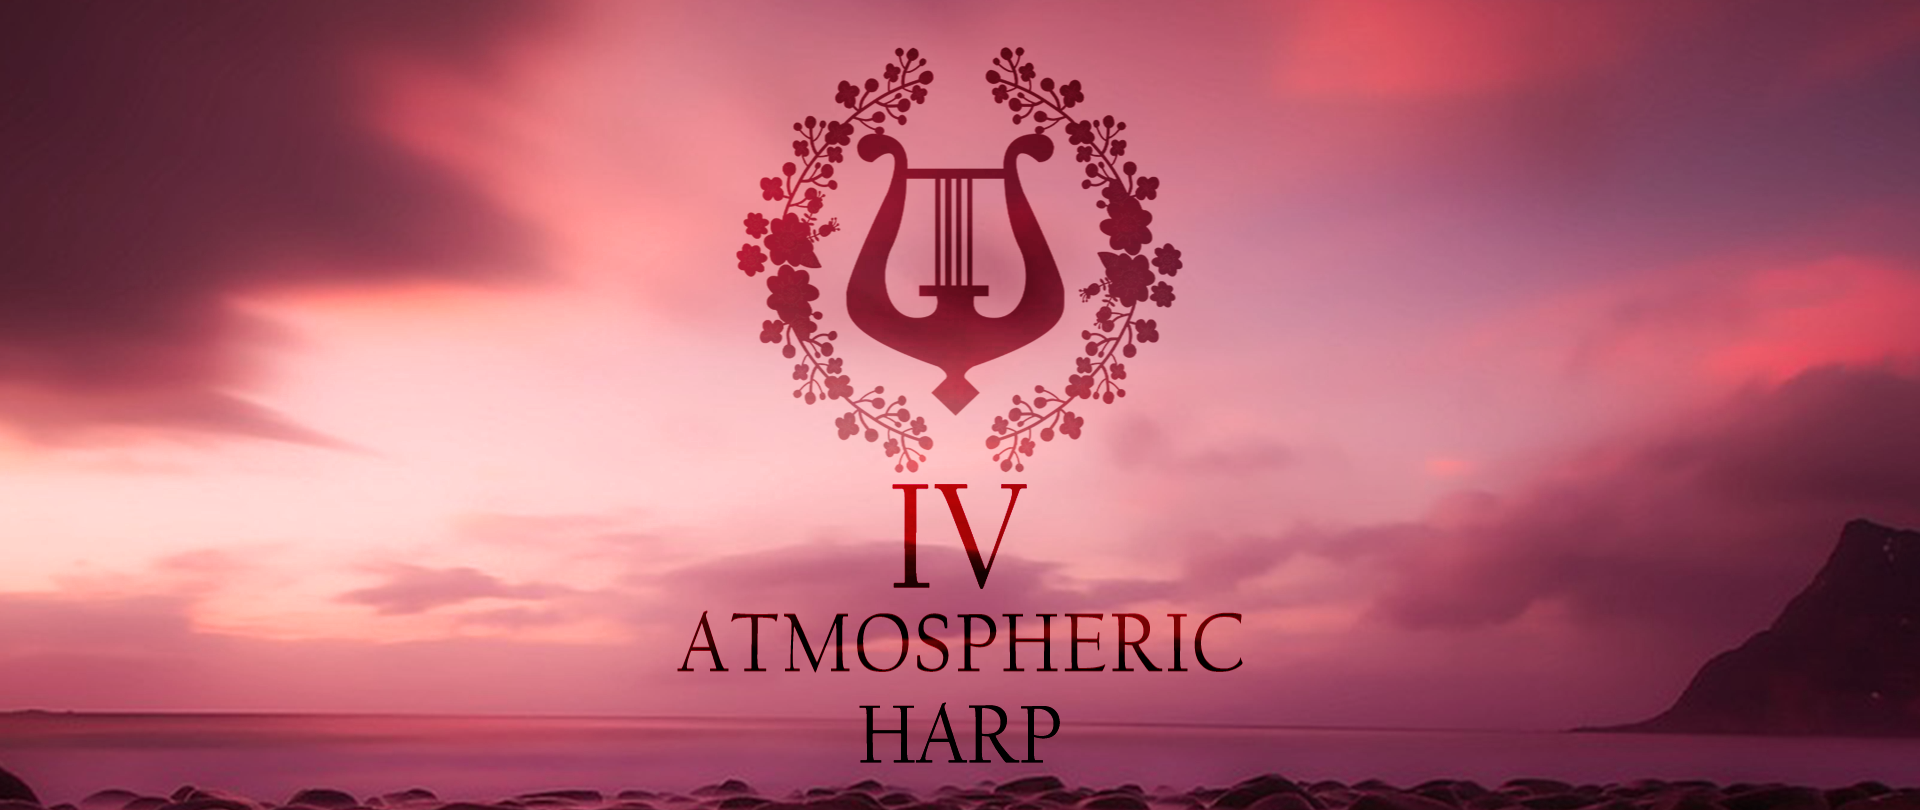 Atmospheric Harp Music IV